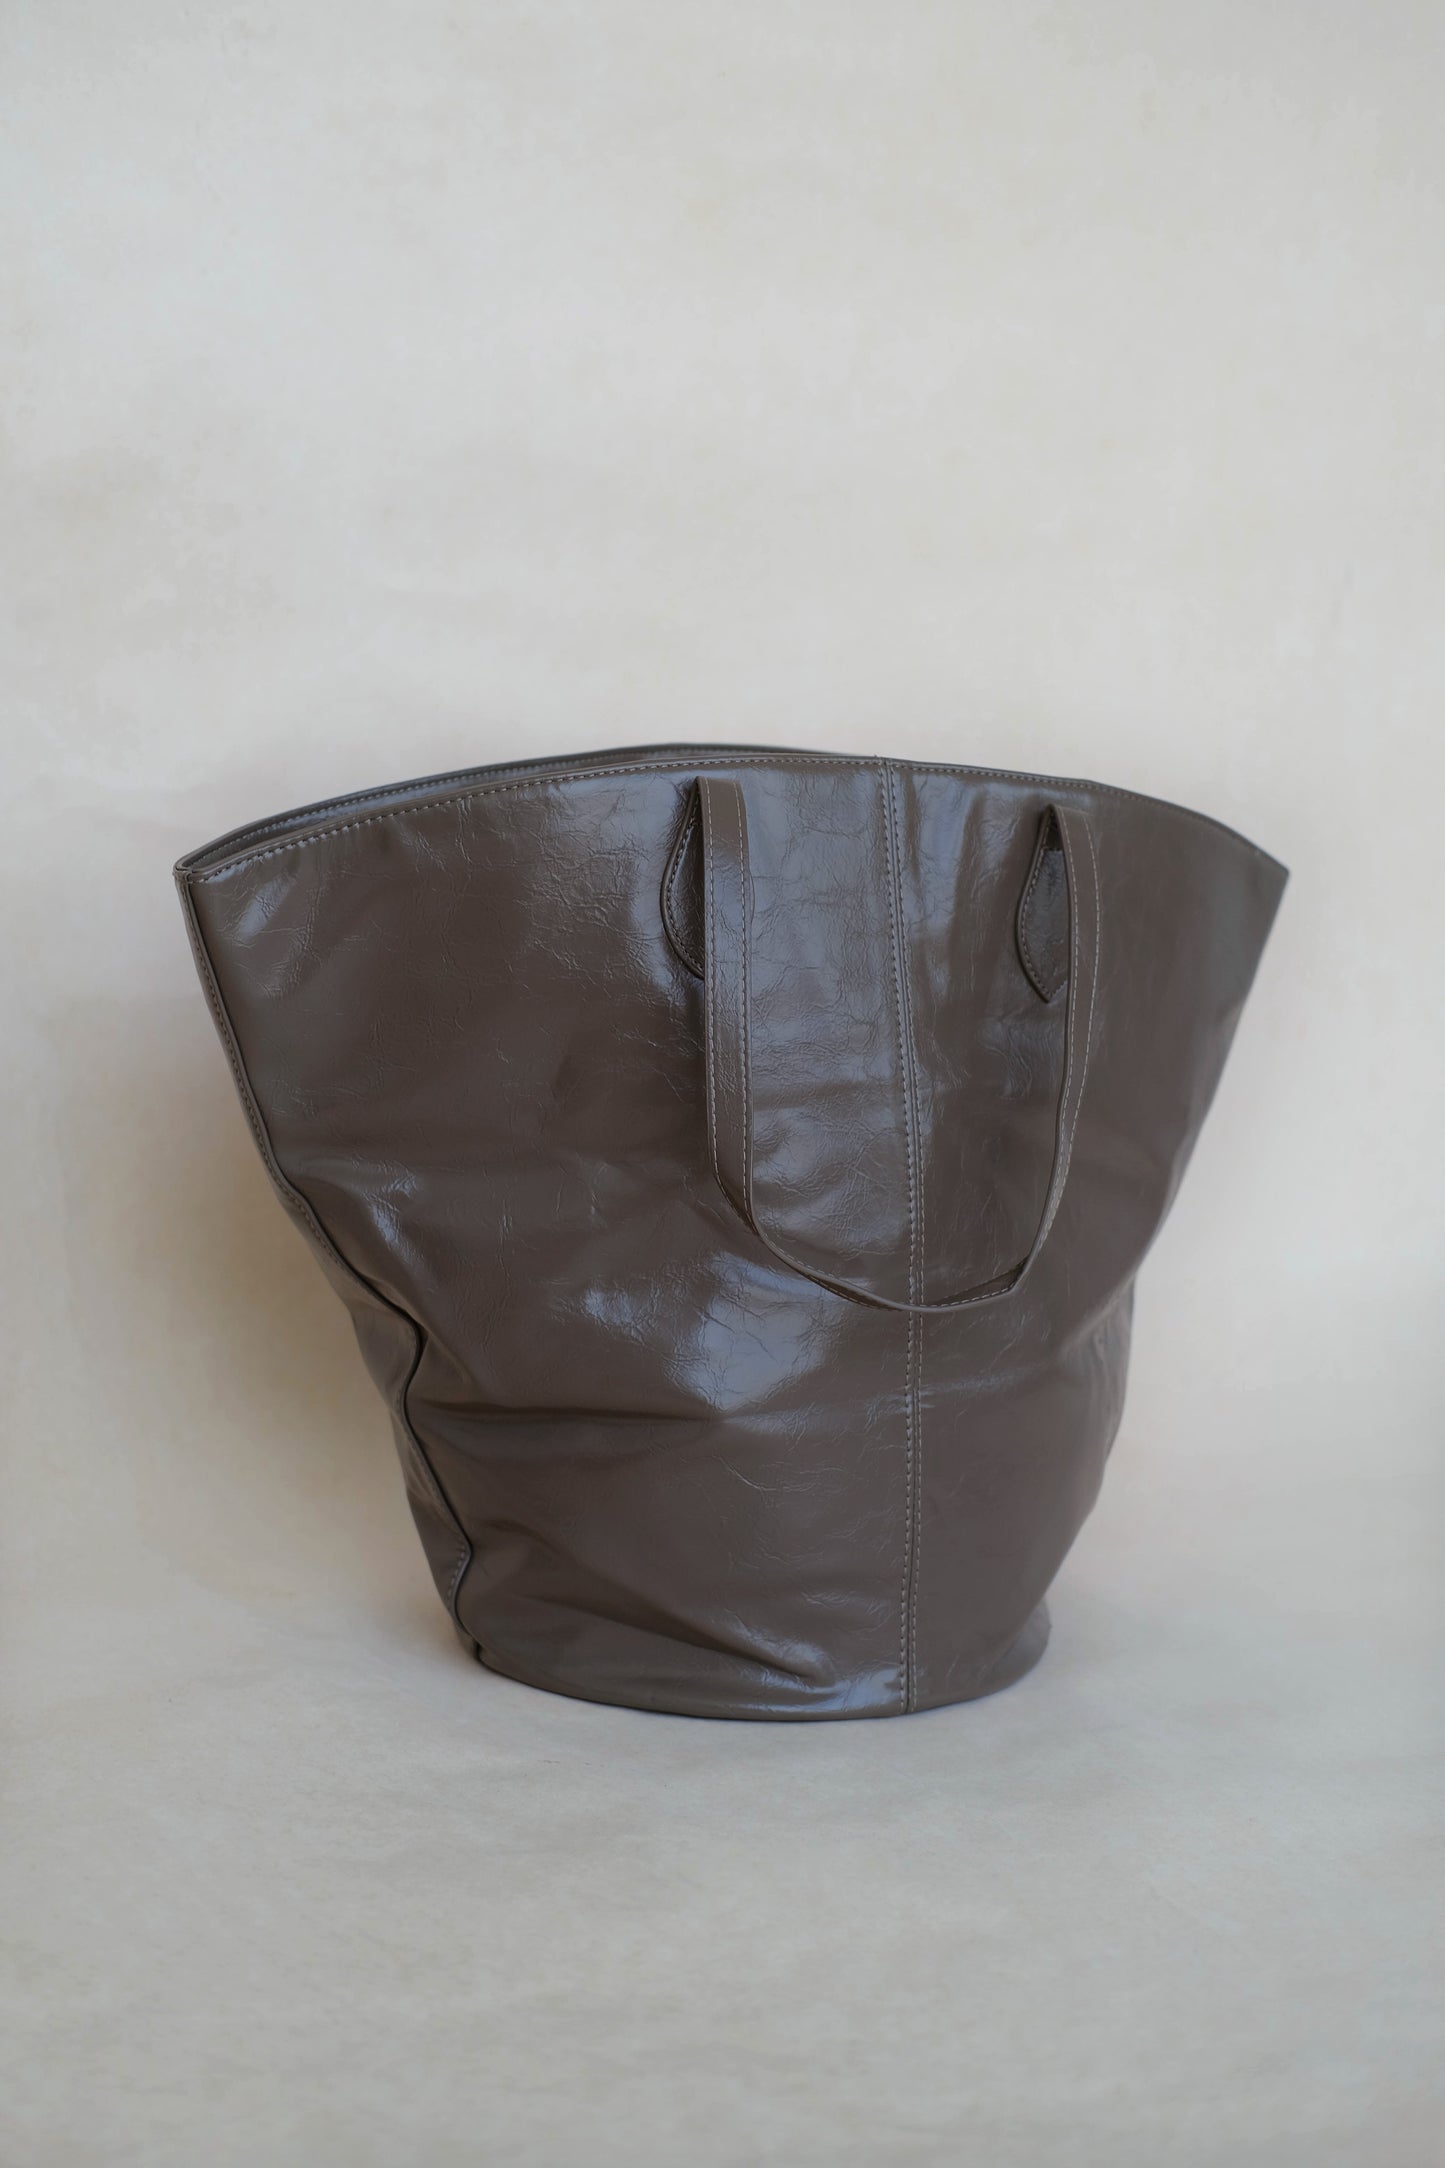 Bucket large capacity shoulder bag in mud color